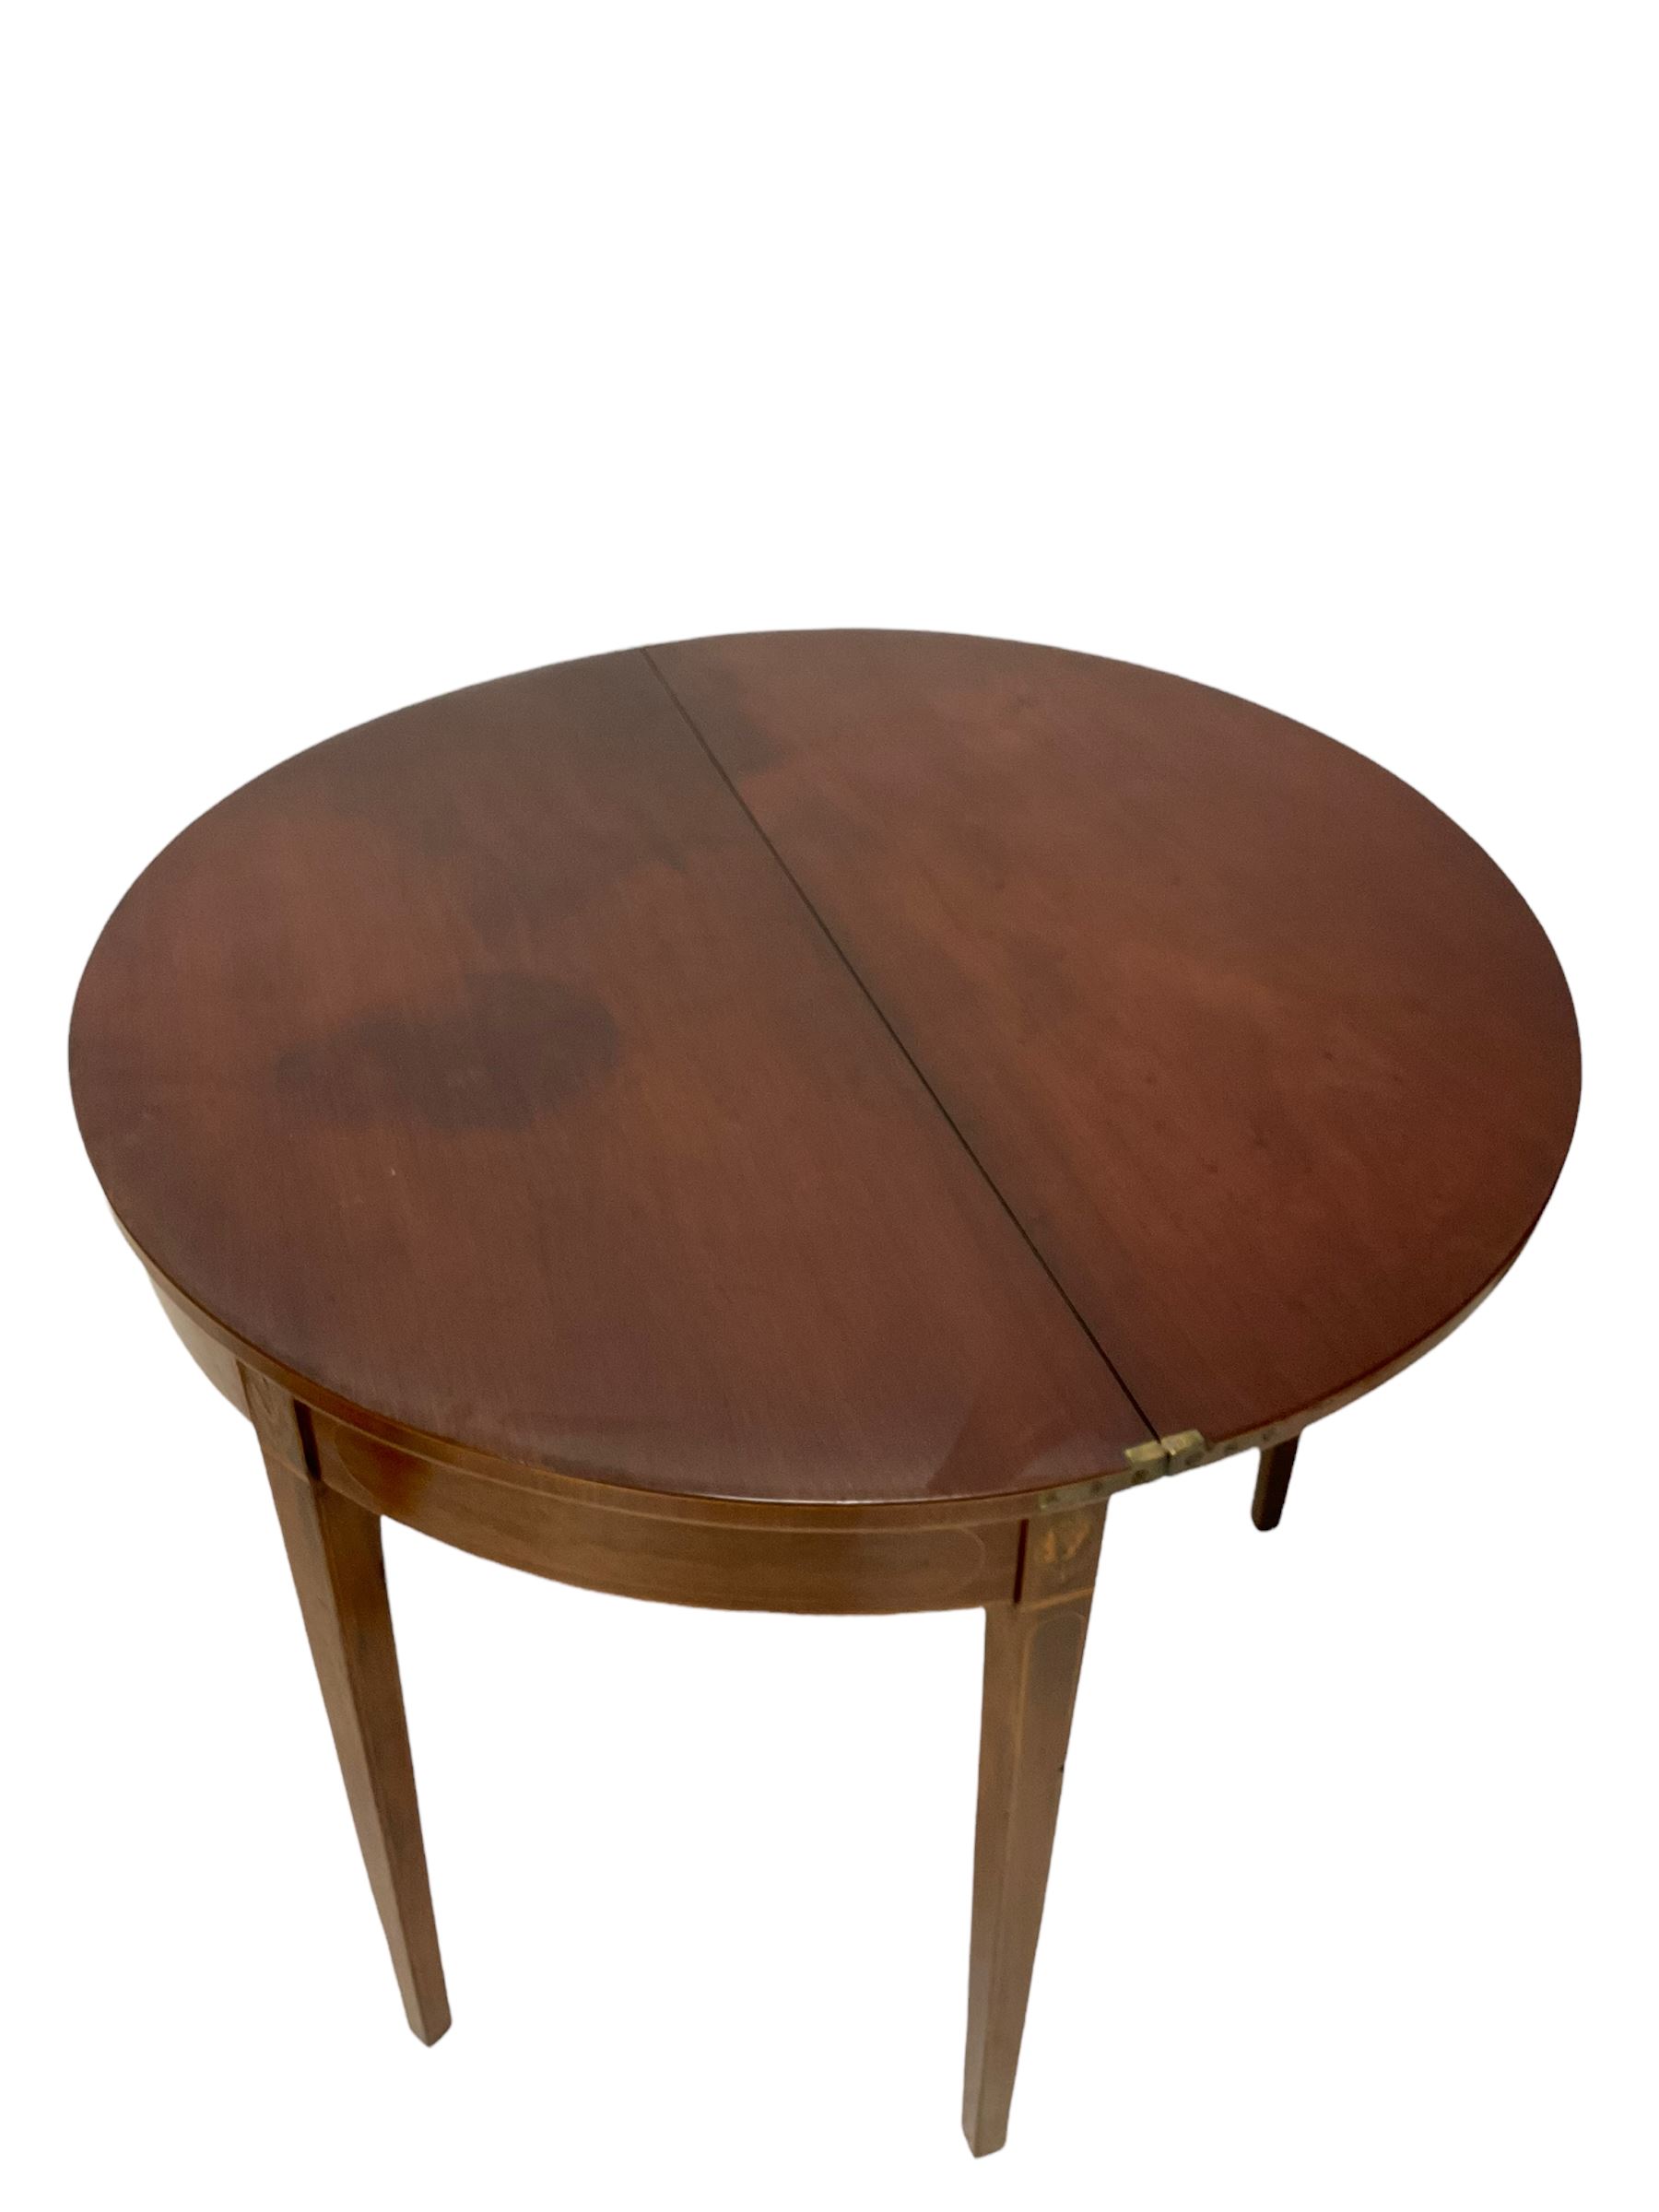 George III mahogany demi lune tea table - Image 4 of 4